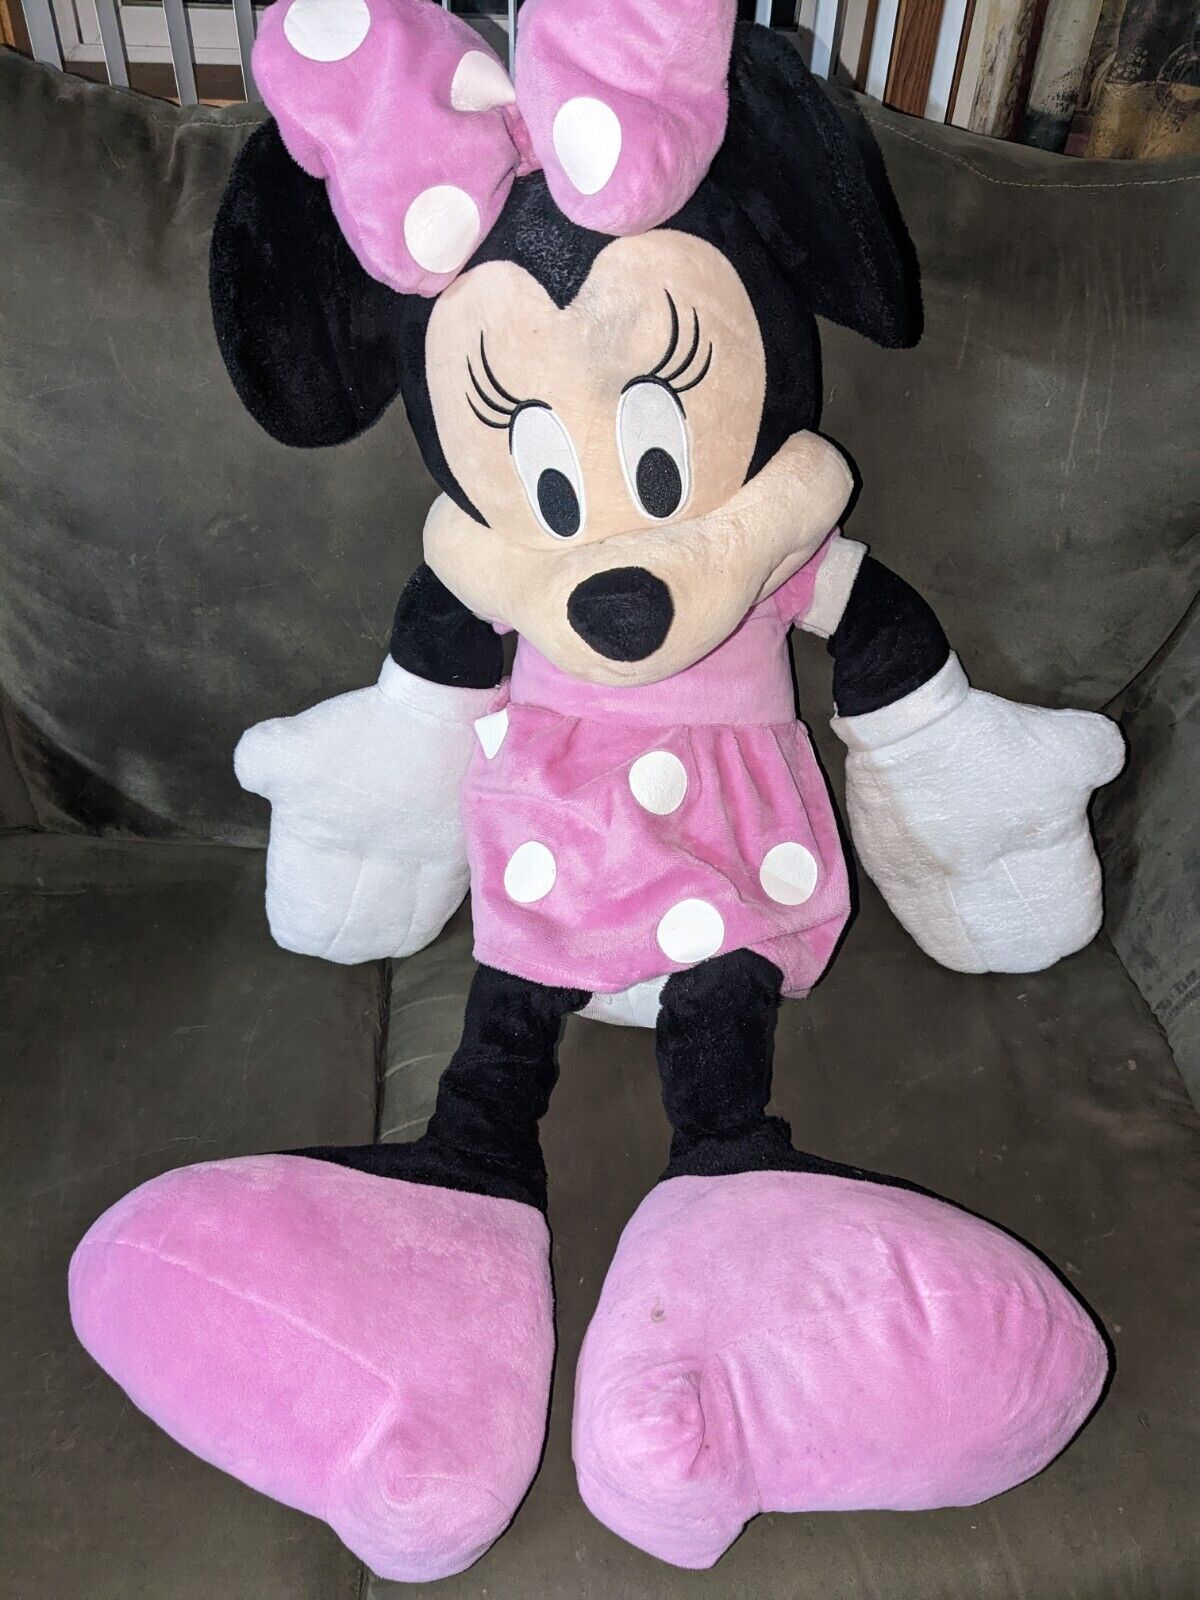 Jumbo 40" Plush Disney Minnie Mouse Doll Pink Dress Bow & Shoes 